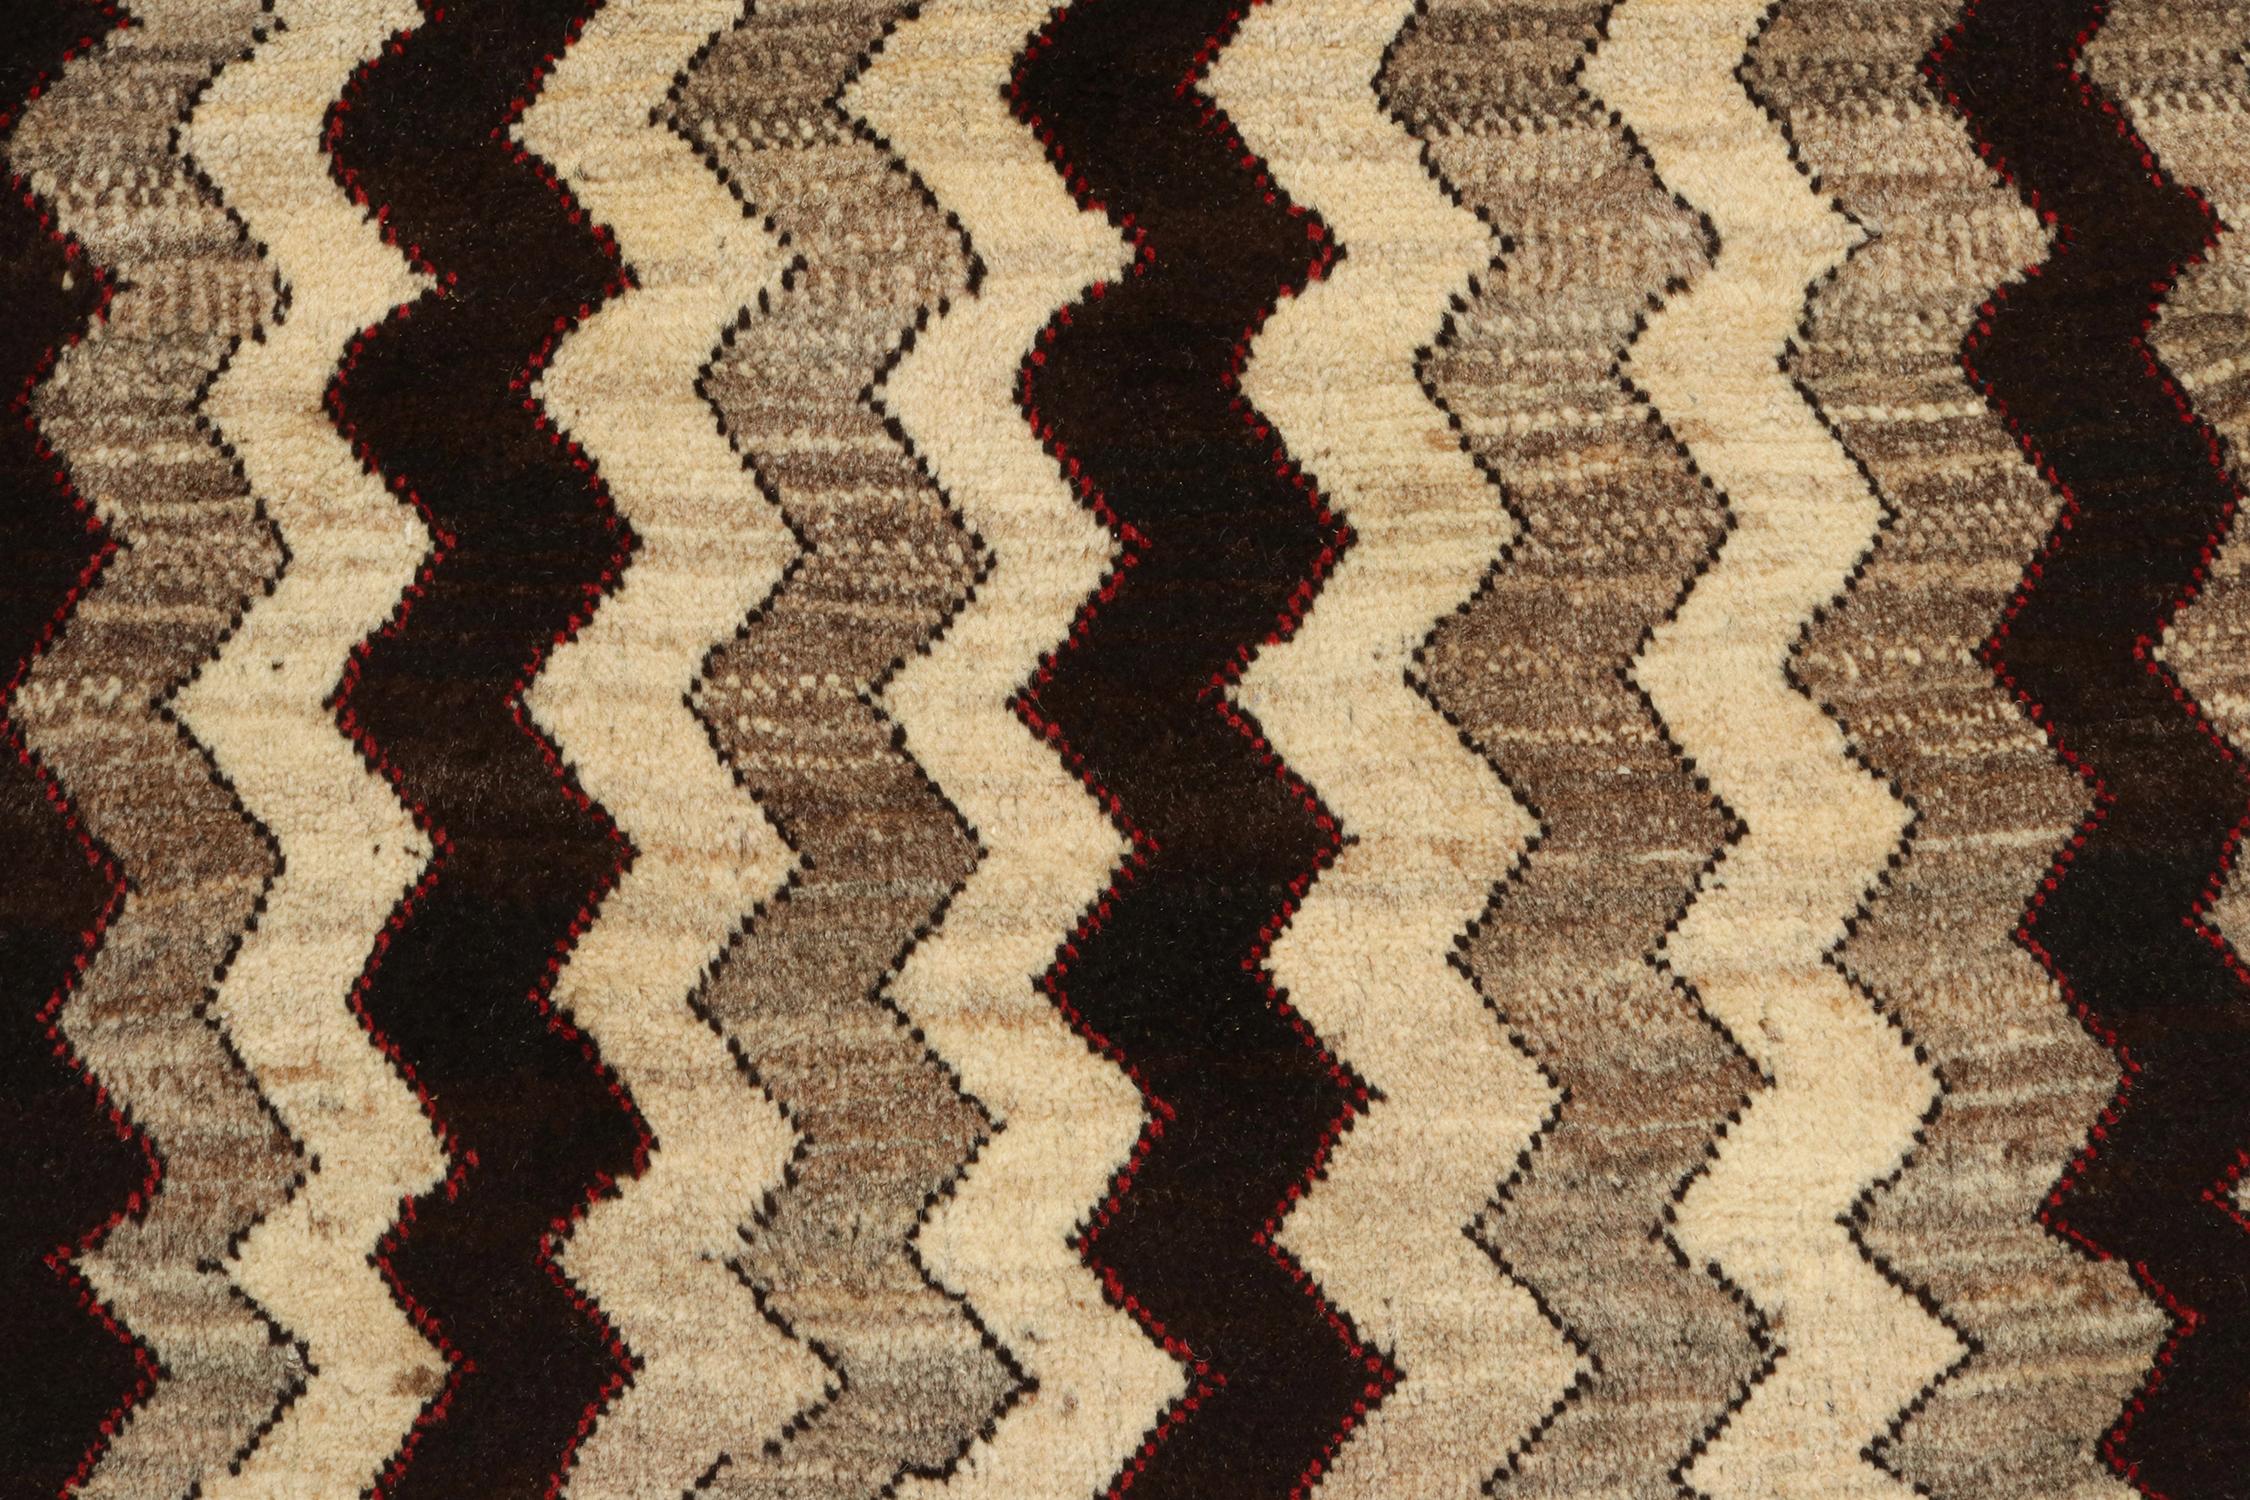 Mid-20th Century Vintage Gabbeh Tribal Rug in Beige-Brown & Black Chevron Patterns by Rug & Kilim For Sale